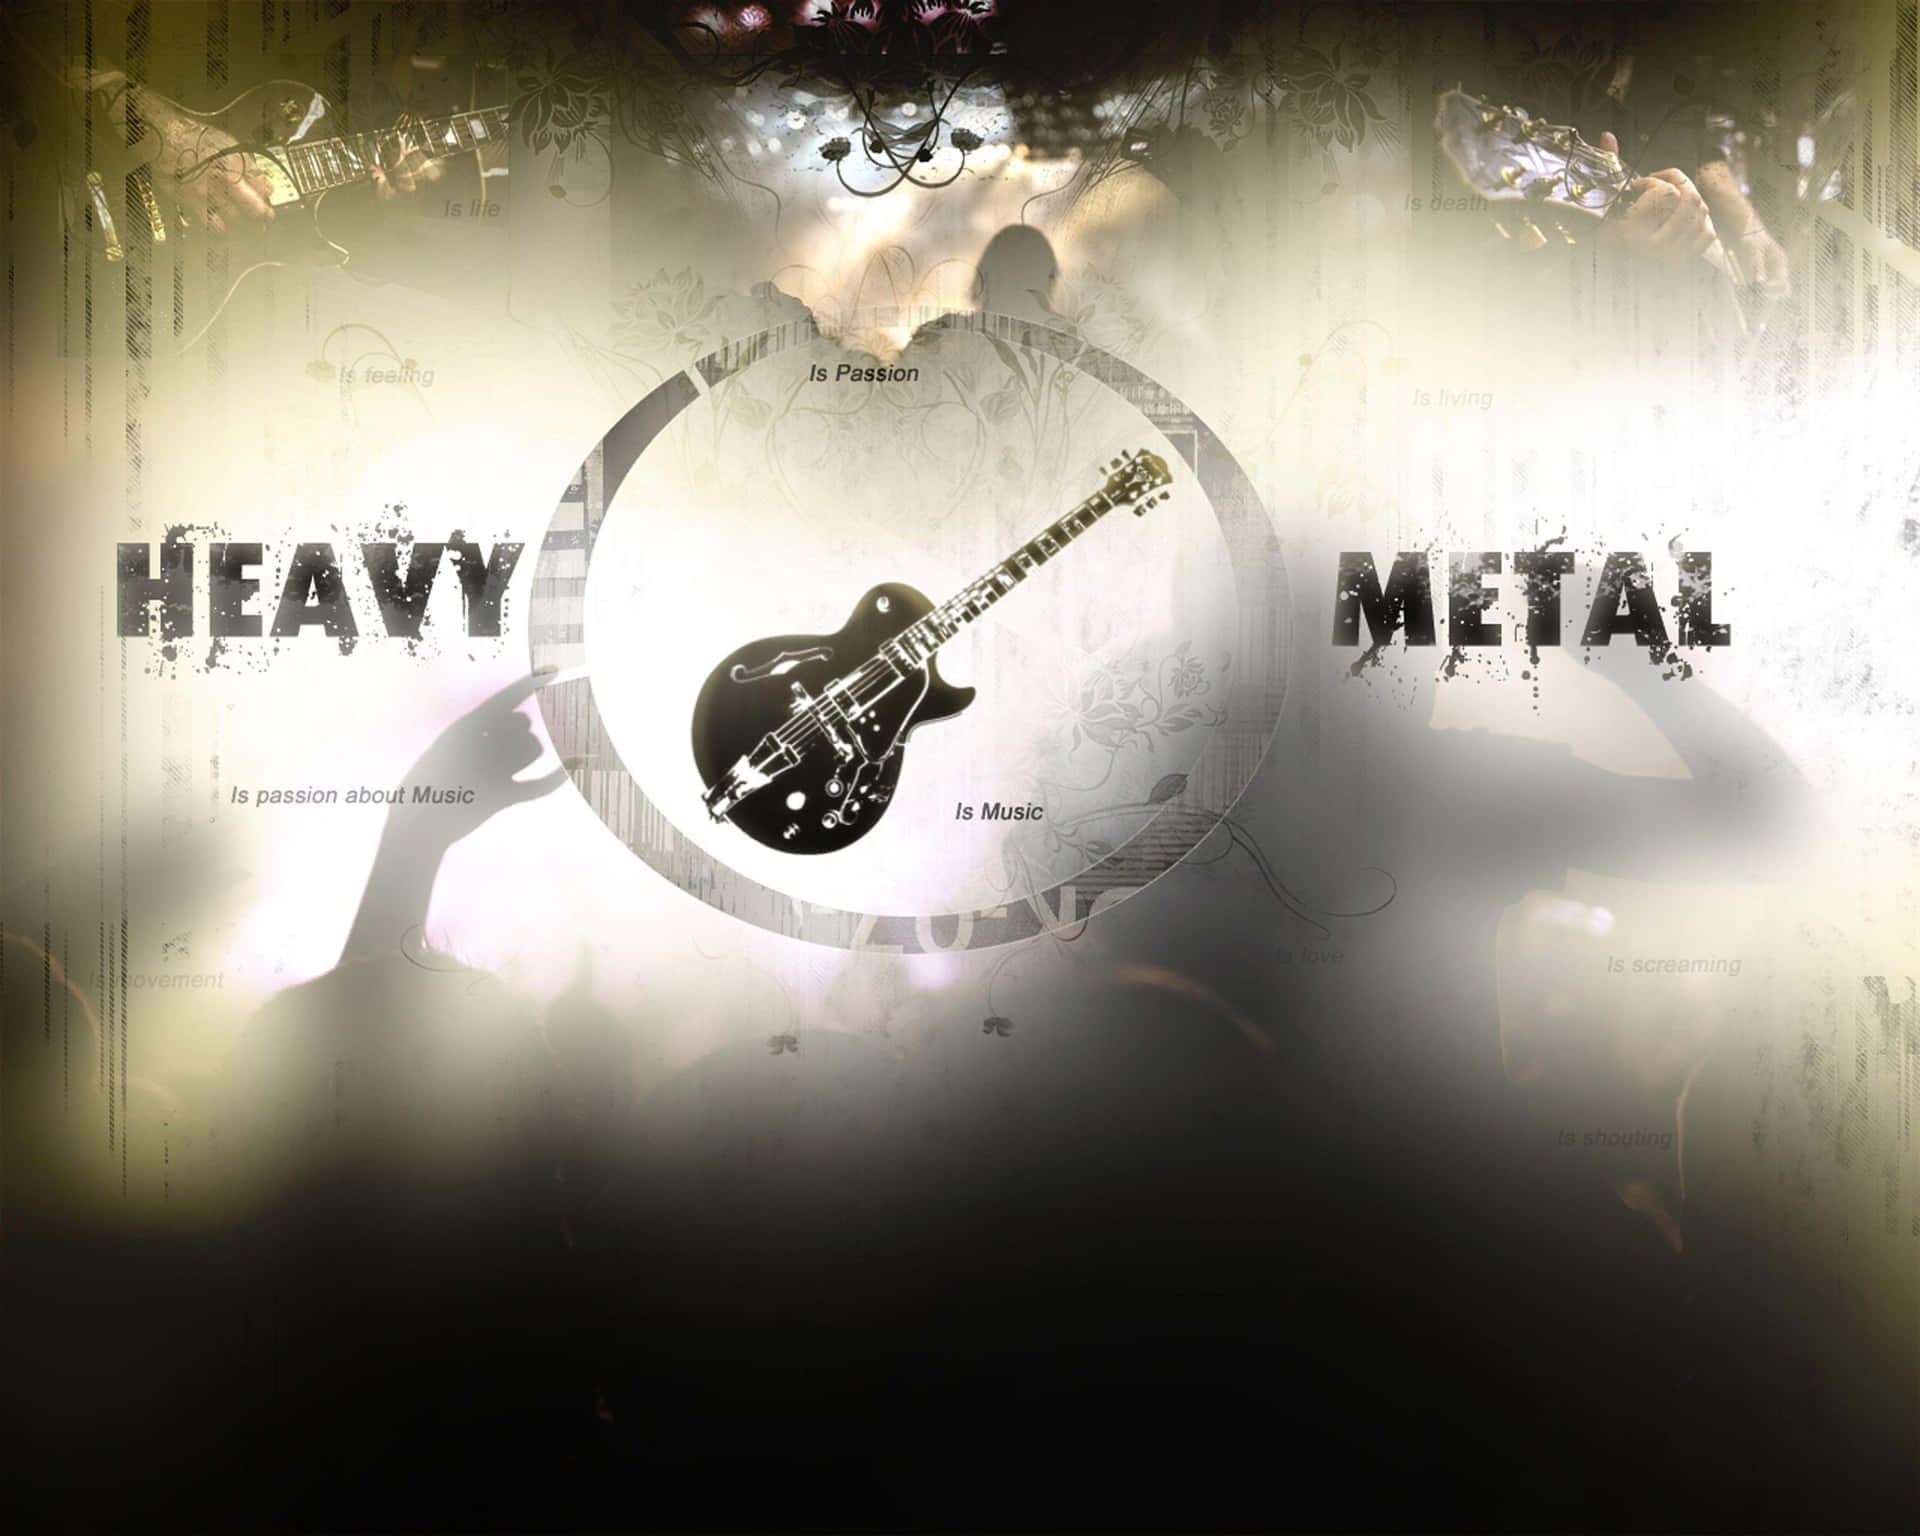 Roaring Flames And Metallic Skull - Essence Of Heavy Metal